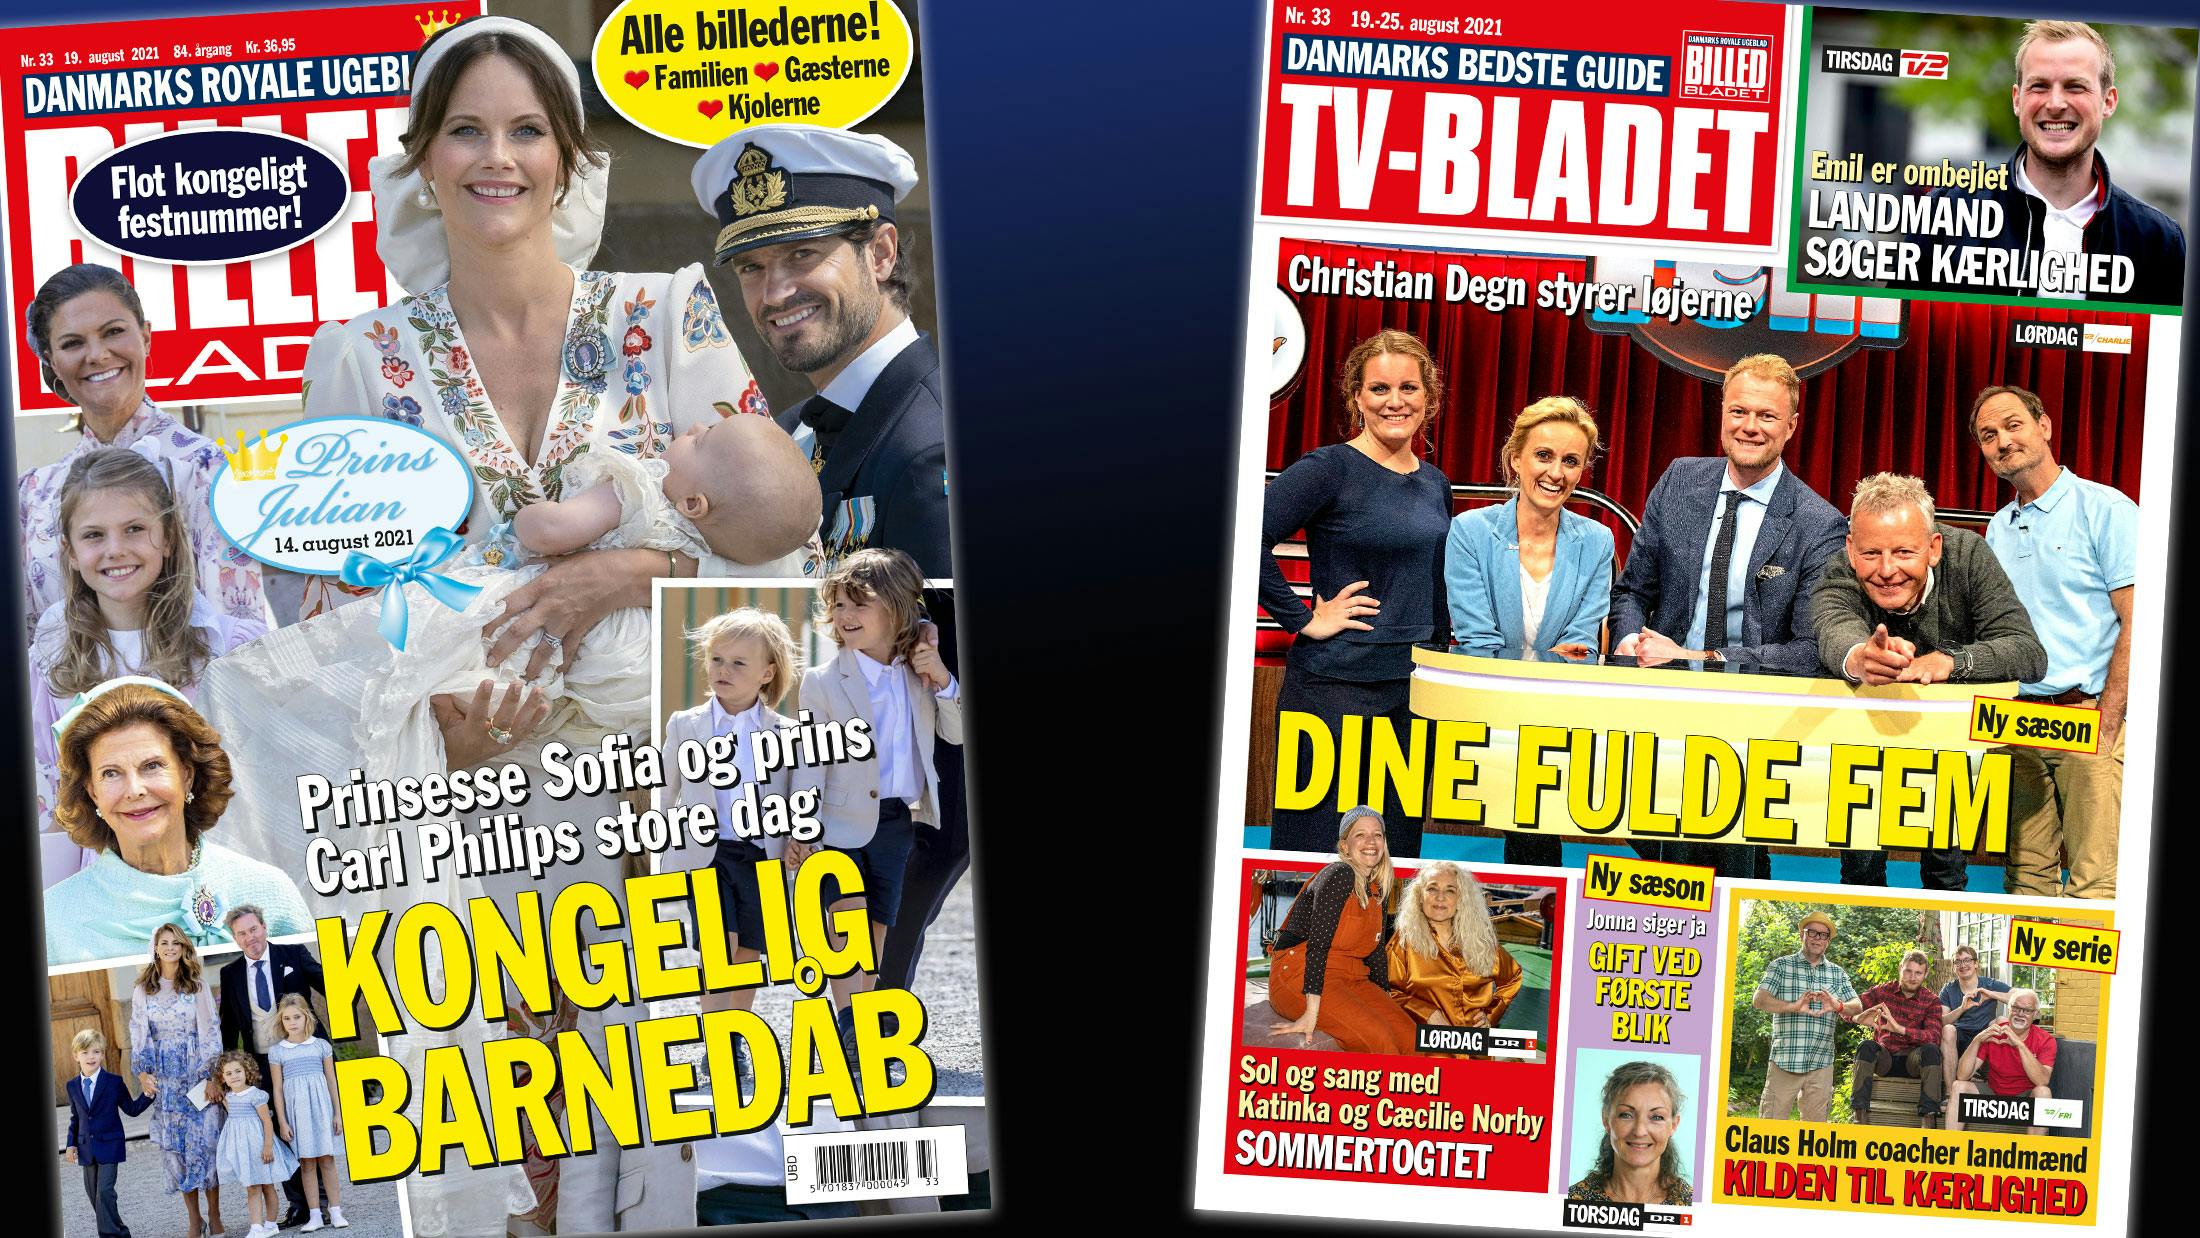 https://imgix.billedbladet.dk/media/article/webgrafik_bb33-forsider_0.jpg